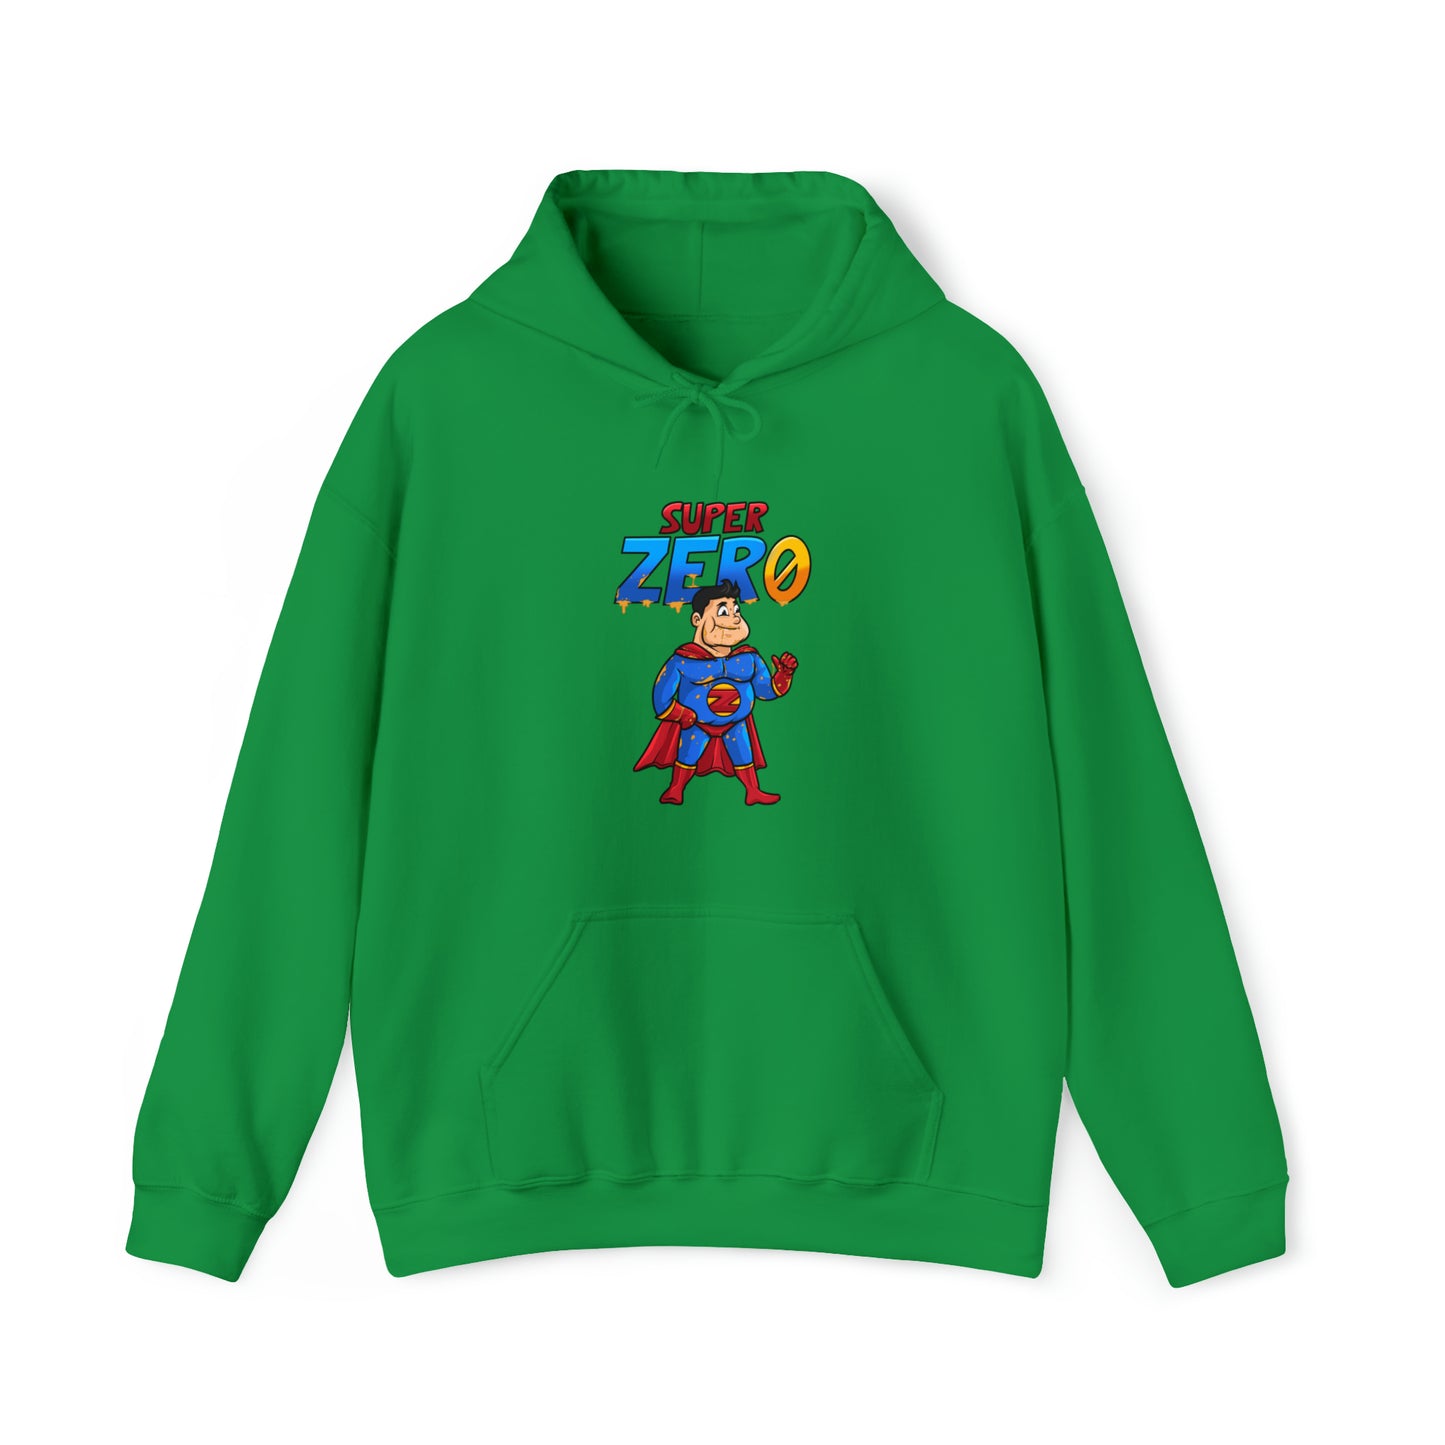 Custom Parody Hooded Sweatshirt, Super Zero design